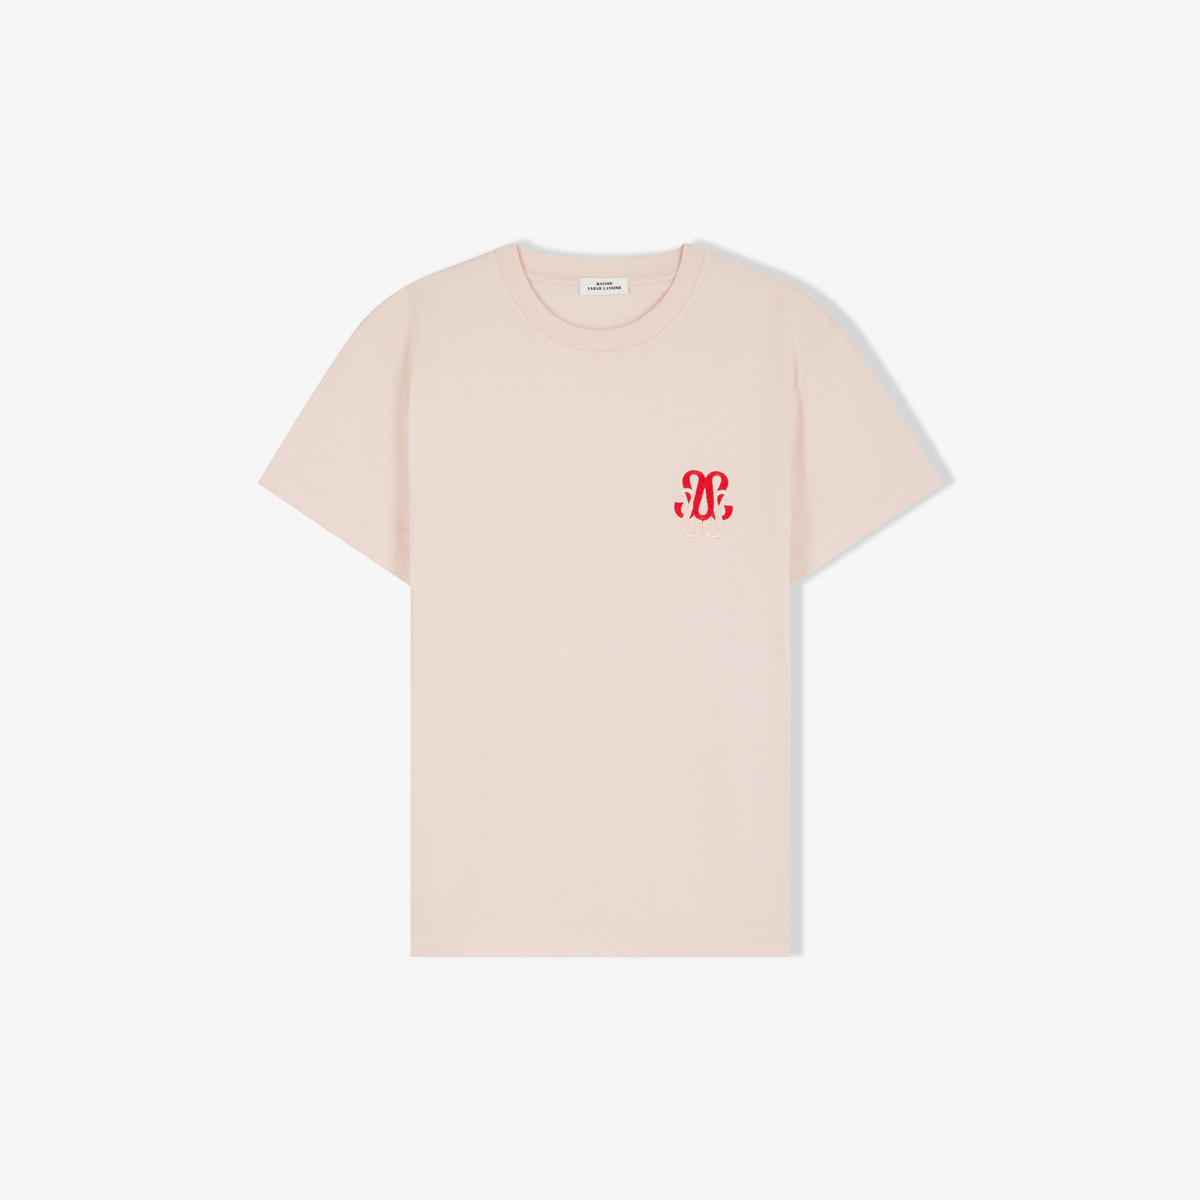 Monogram T-shirt, Baby Pink- Round Neck - 100% Cotton - image 1